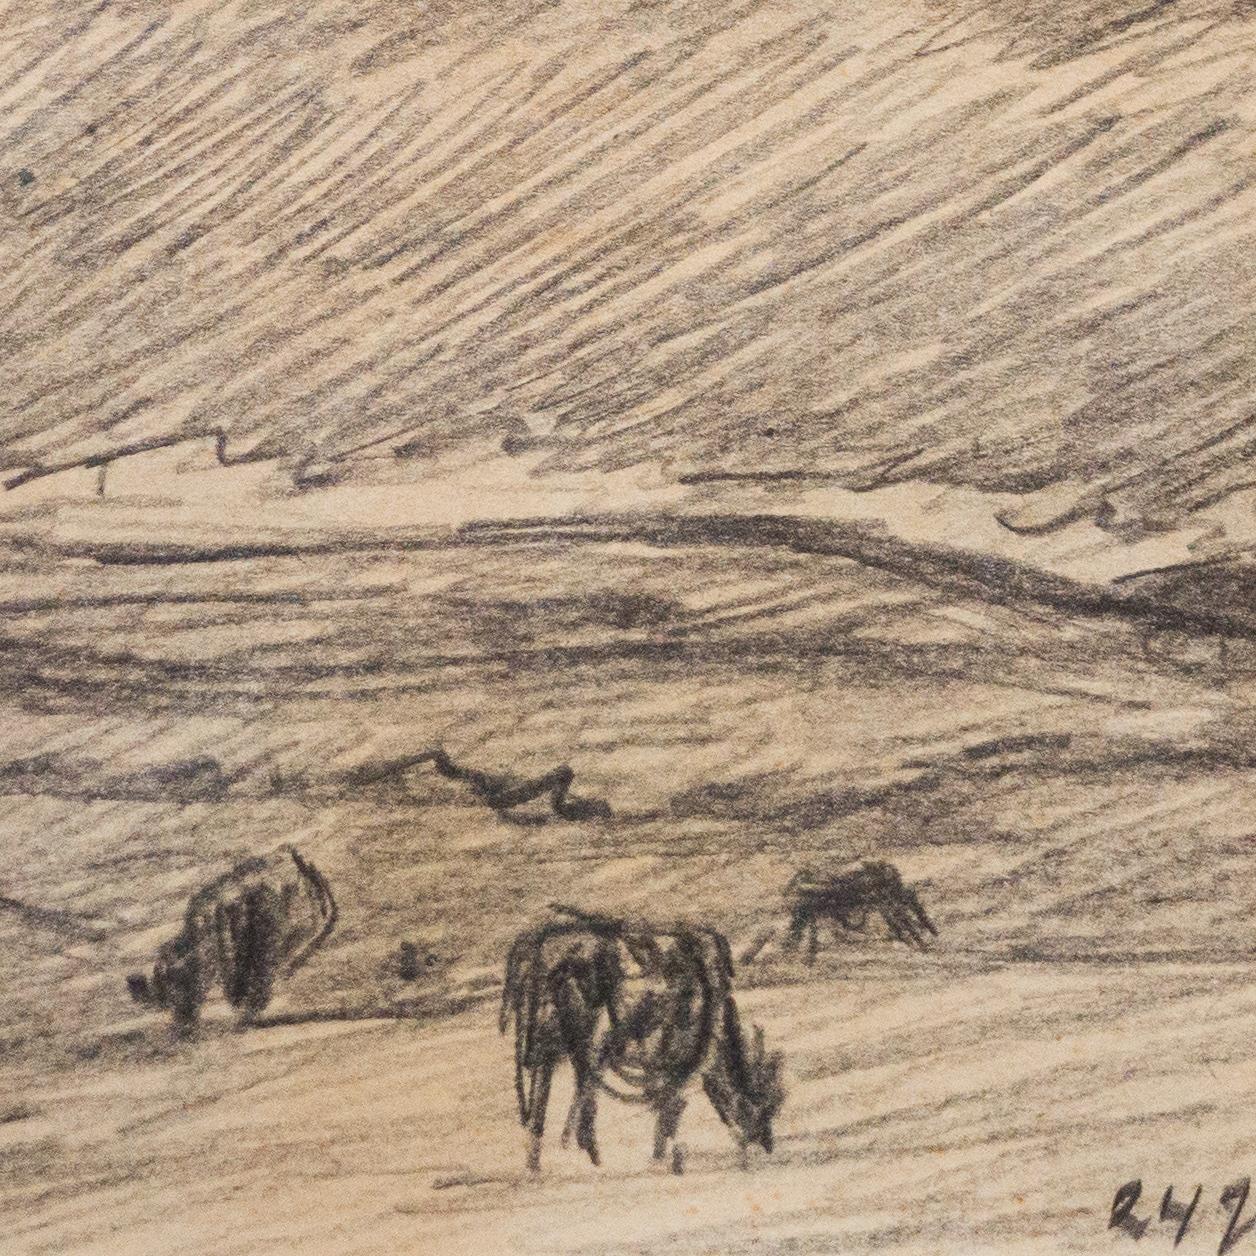 Cows Graze in a Meadow, Pencil, 1907 For Sale 1